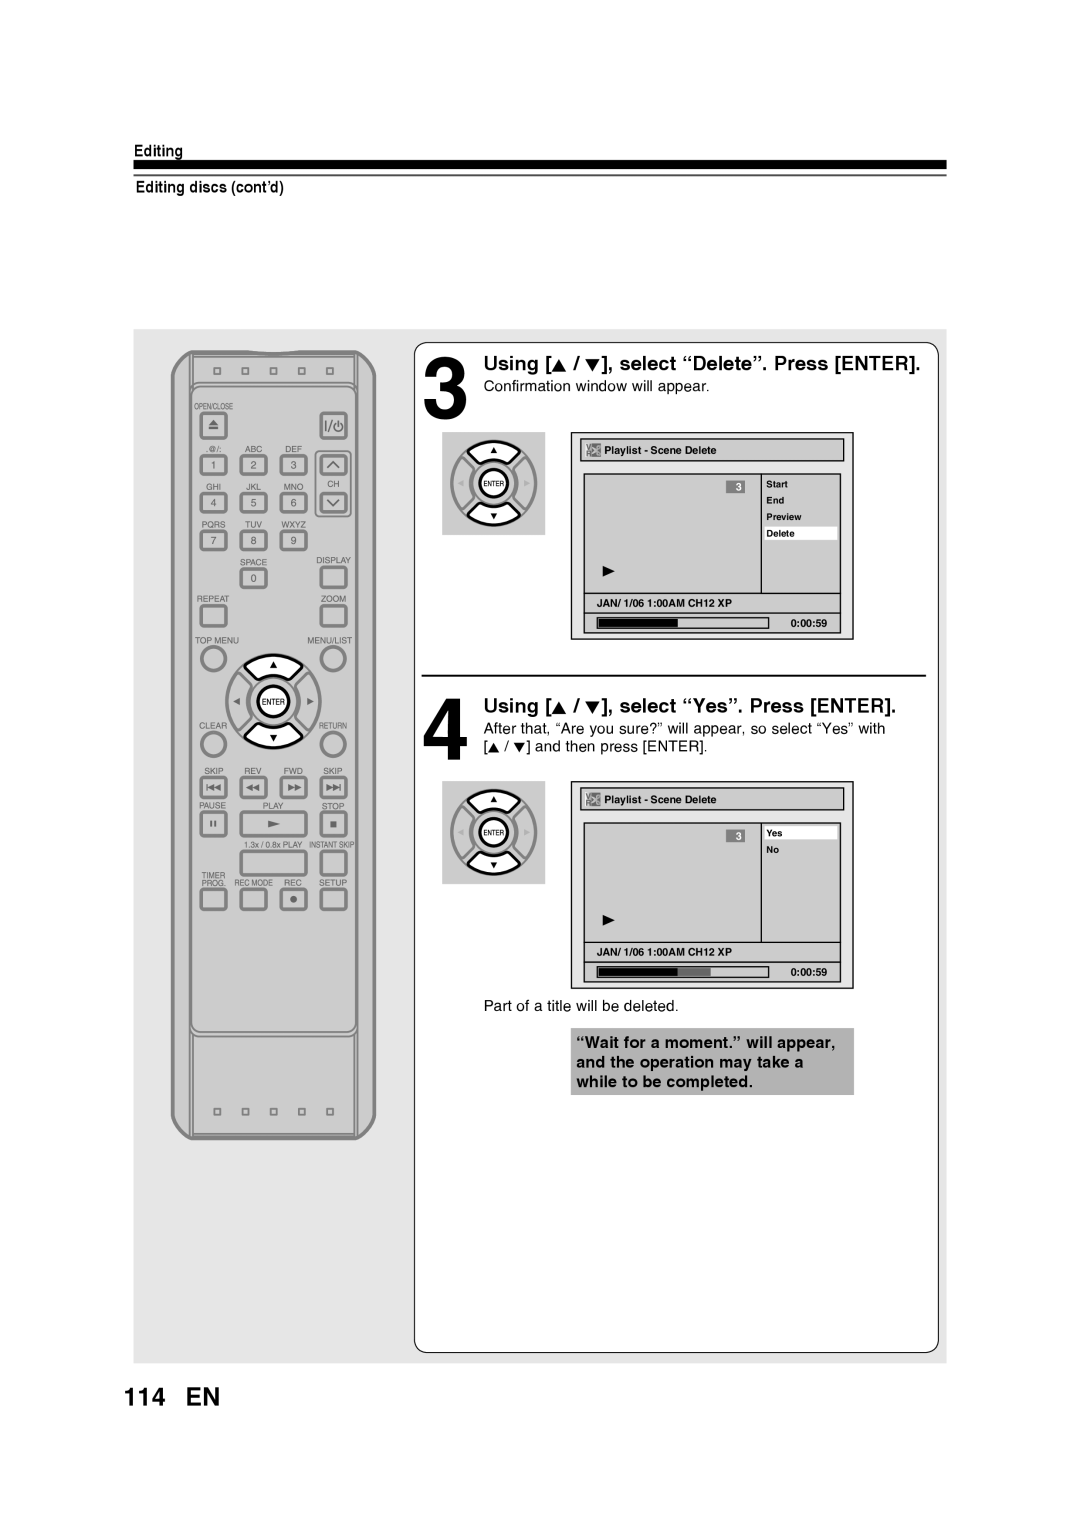 Toshiba D-RW2SU/D-RW2SC manual 114 EN, Using K / L, select “Delete”. Press ENTER, Using K / L, select “Yes”. Press ENTER 